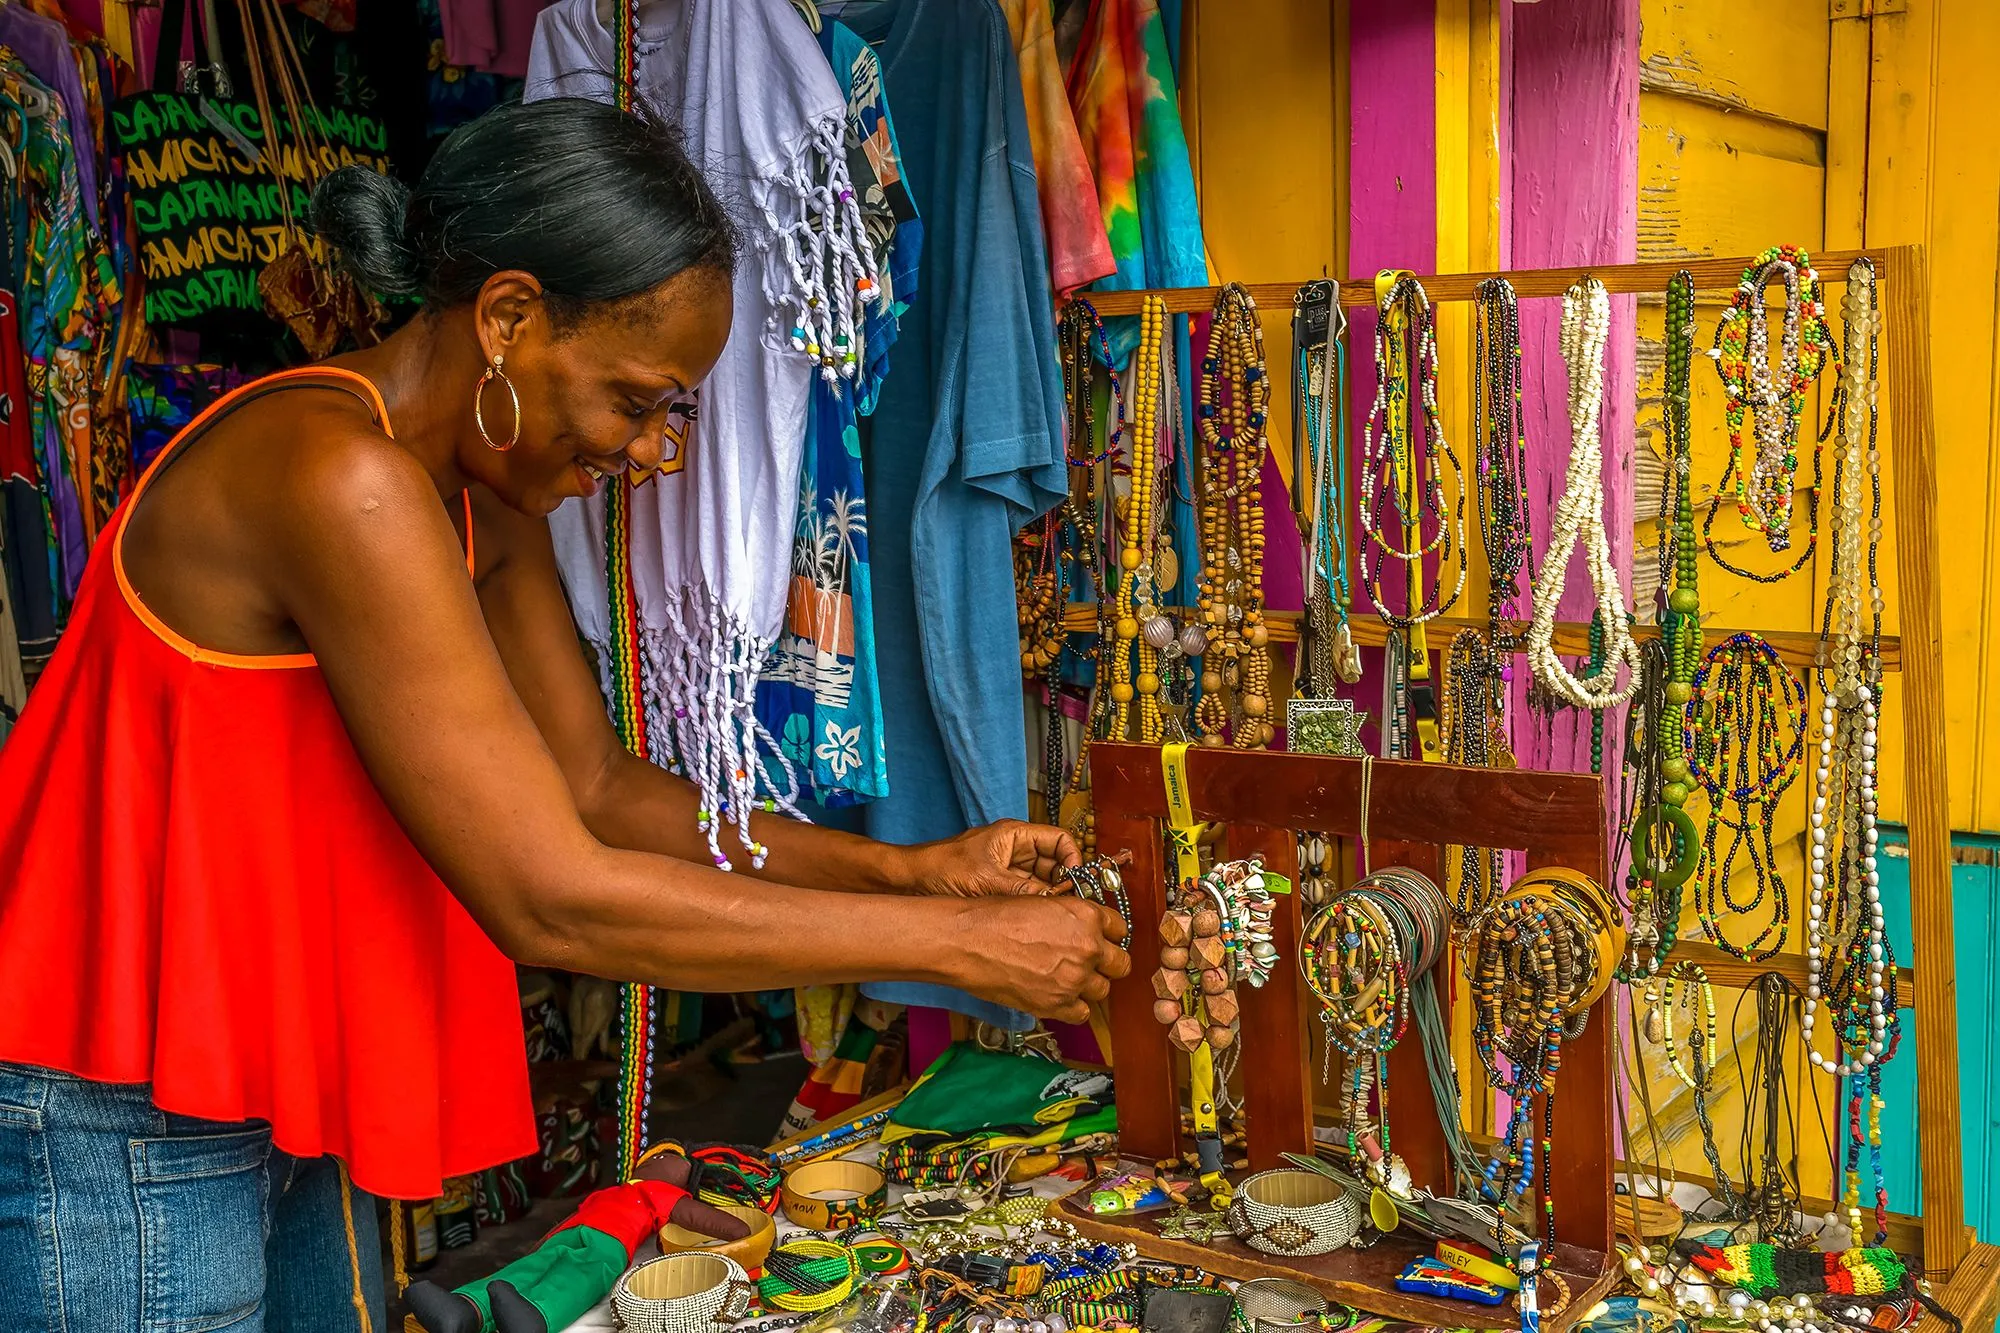 Kingston Craft Market in Jamaica, caribbean | Other Crafts,Handicrafts,Art - Country Helper